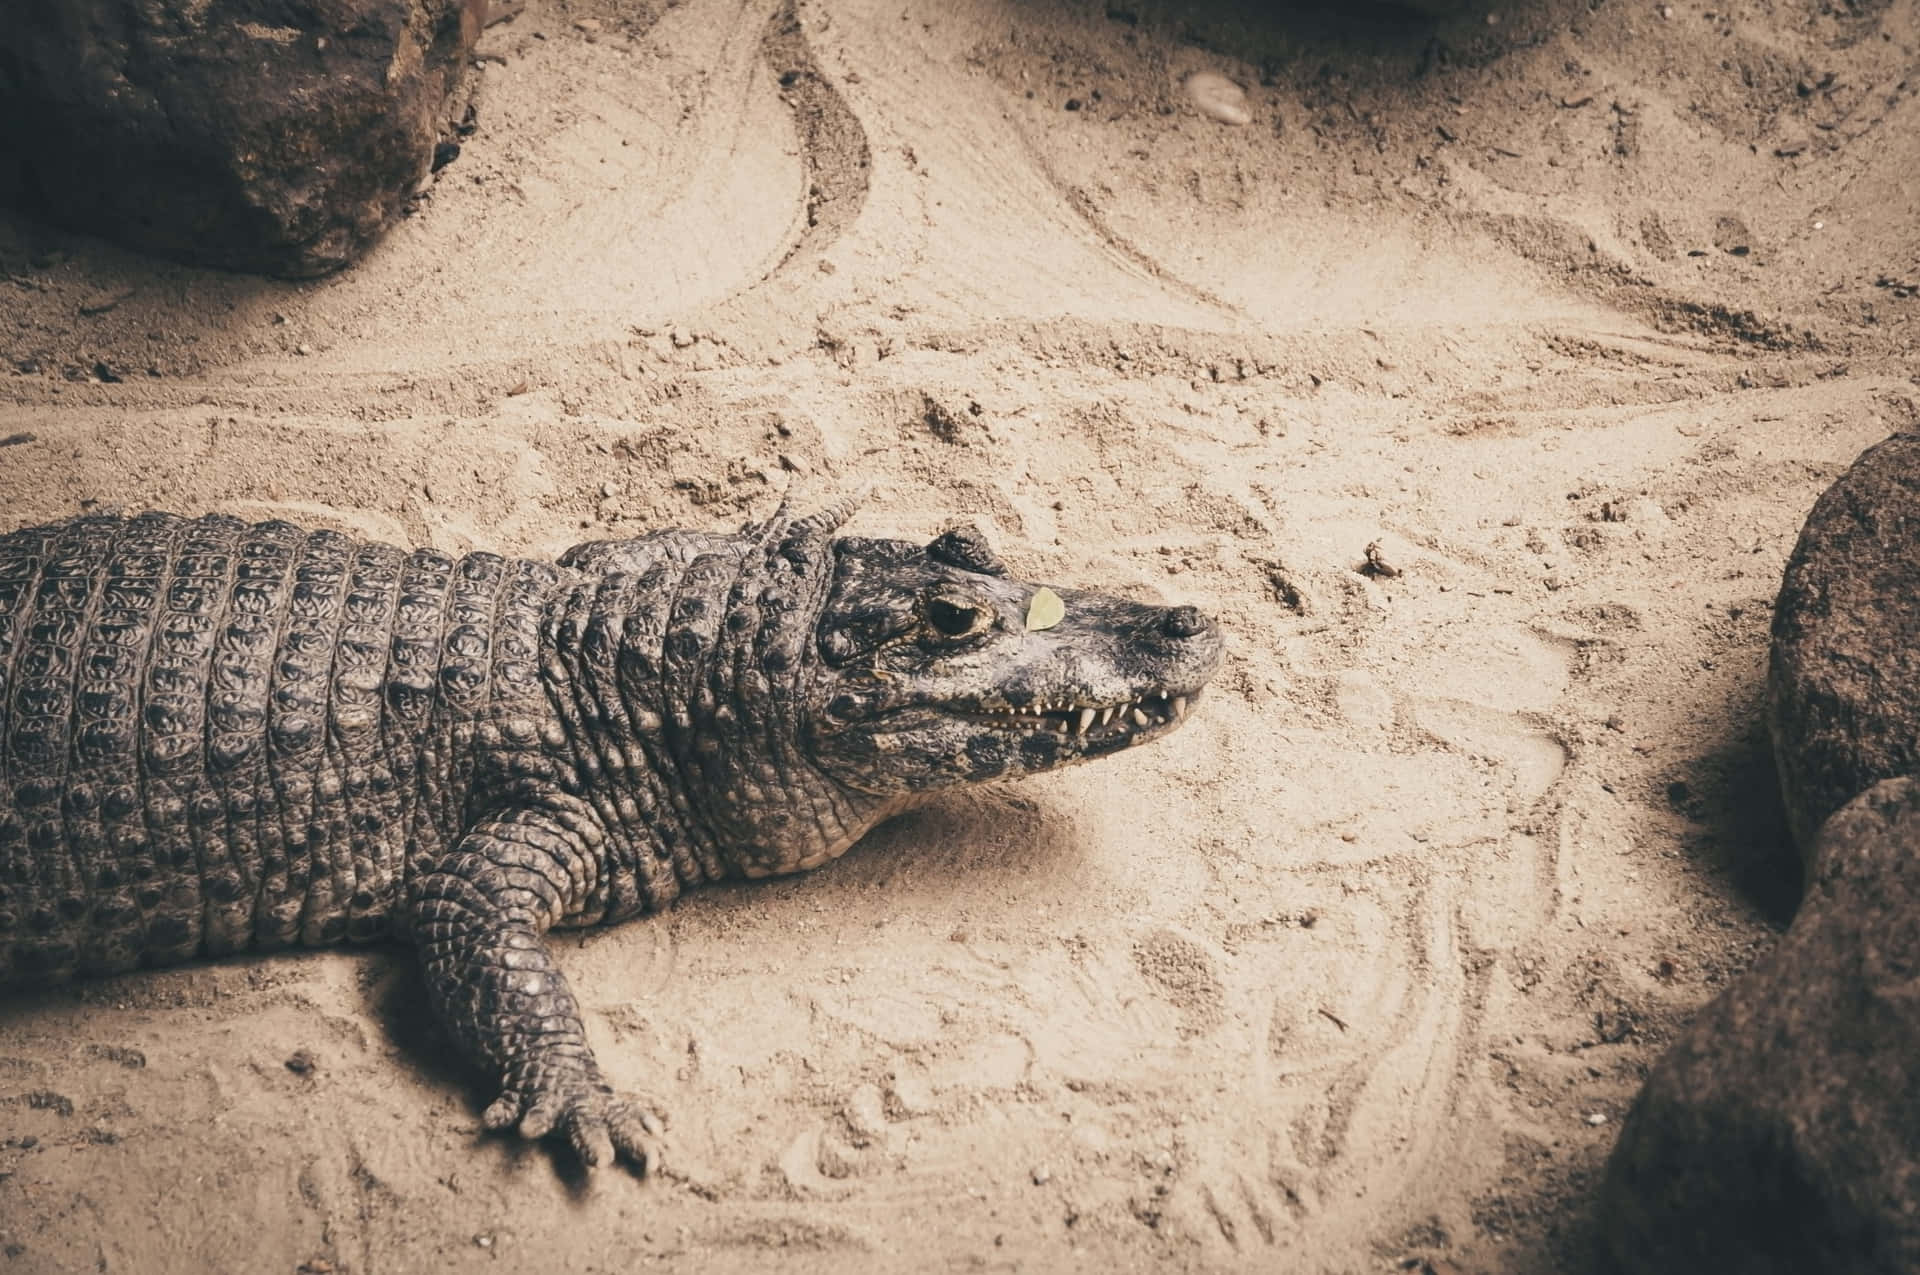 Black Crocodile Restingon Sand Wallpaper